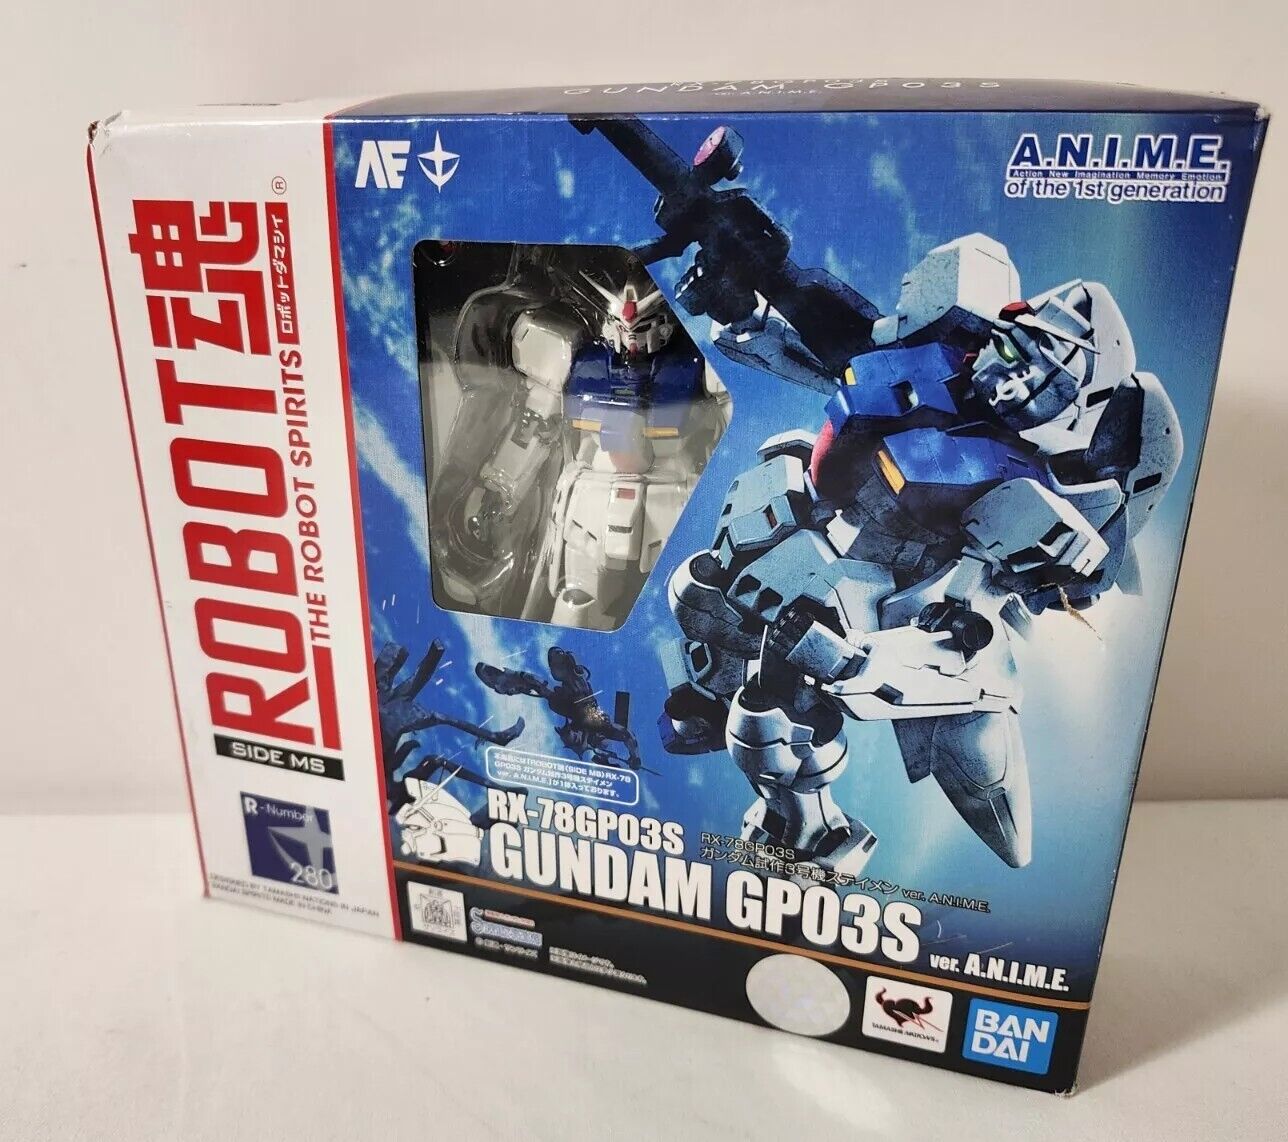 Bandai Gundam Robot Spirits RX-78GP03S Gundam GP03S (ver. A.N.I.M.E.) - OPEN BOX